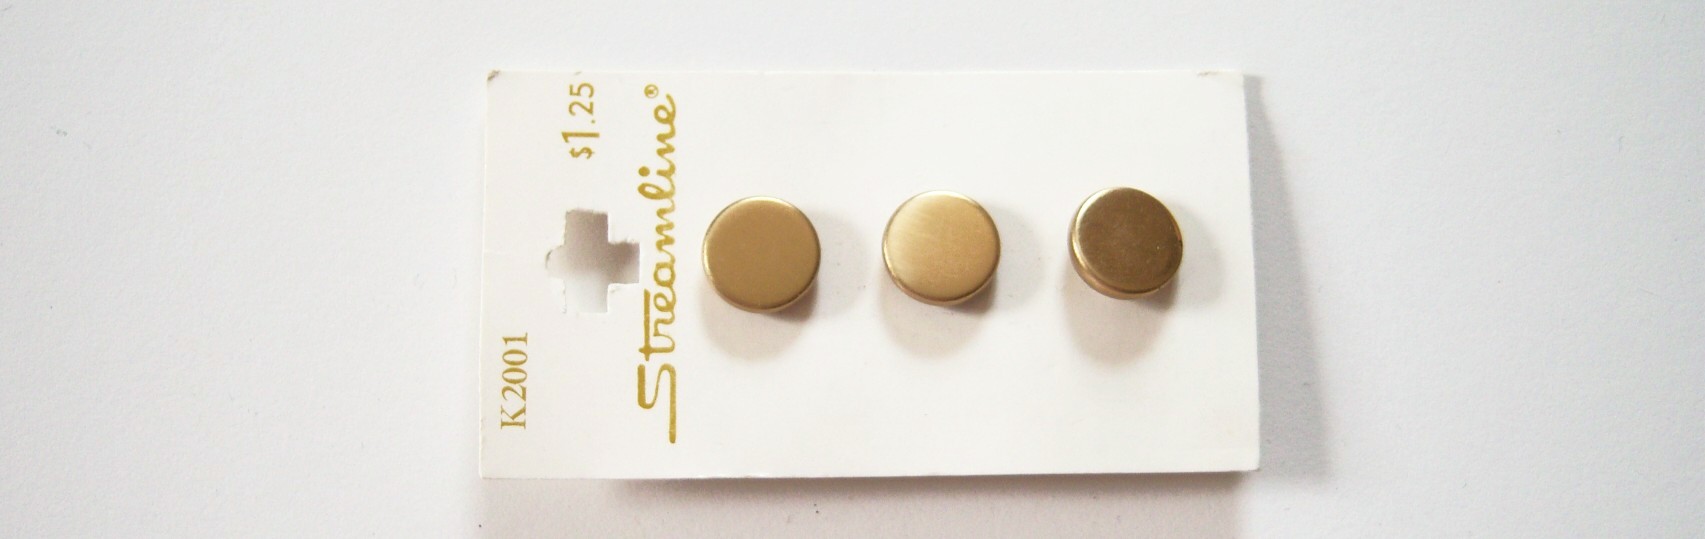 Gold Shank 3 Button Card K2001